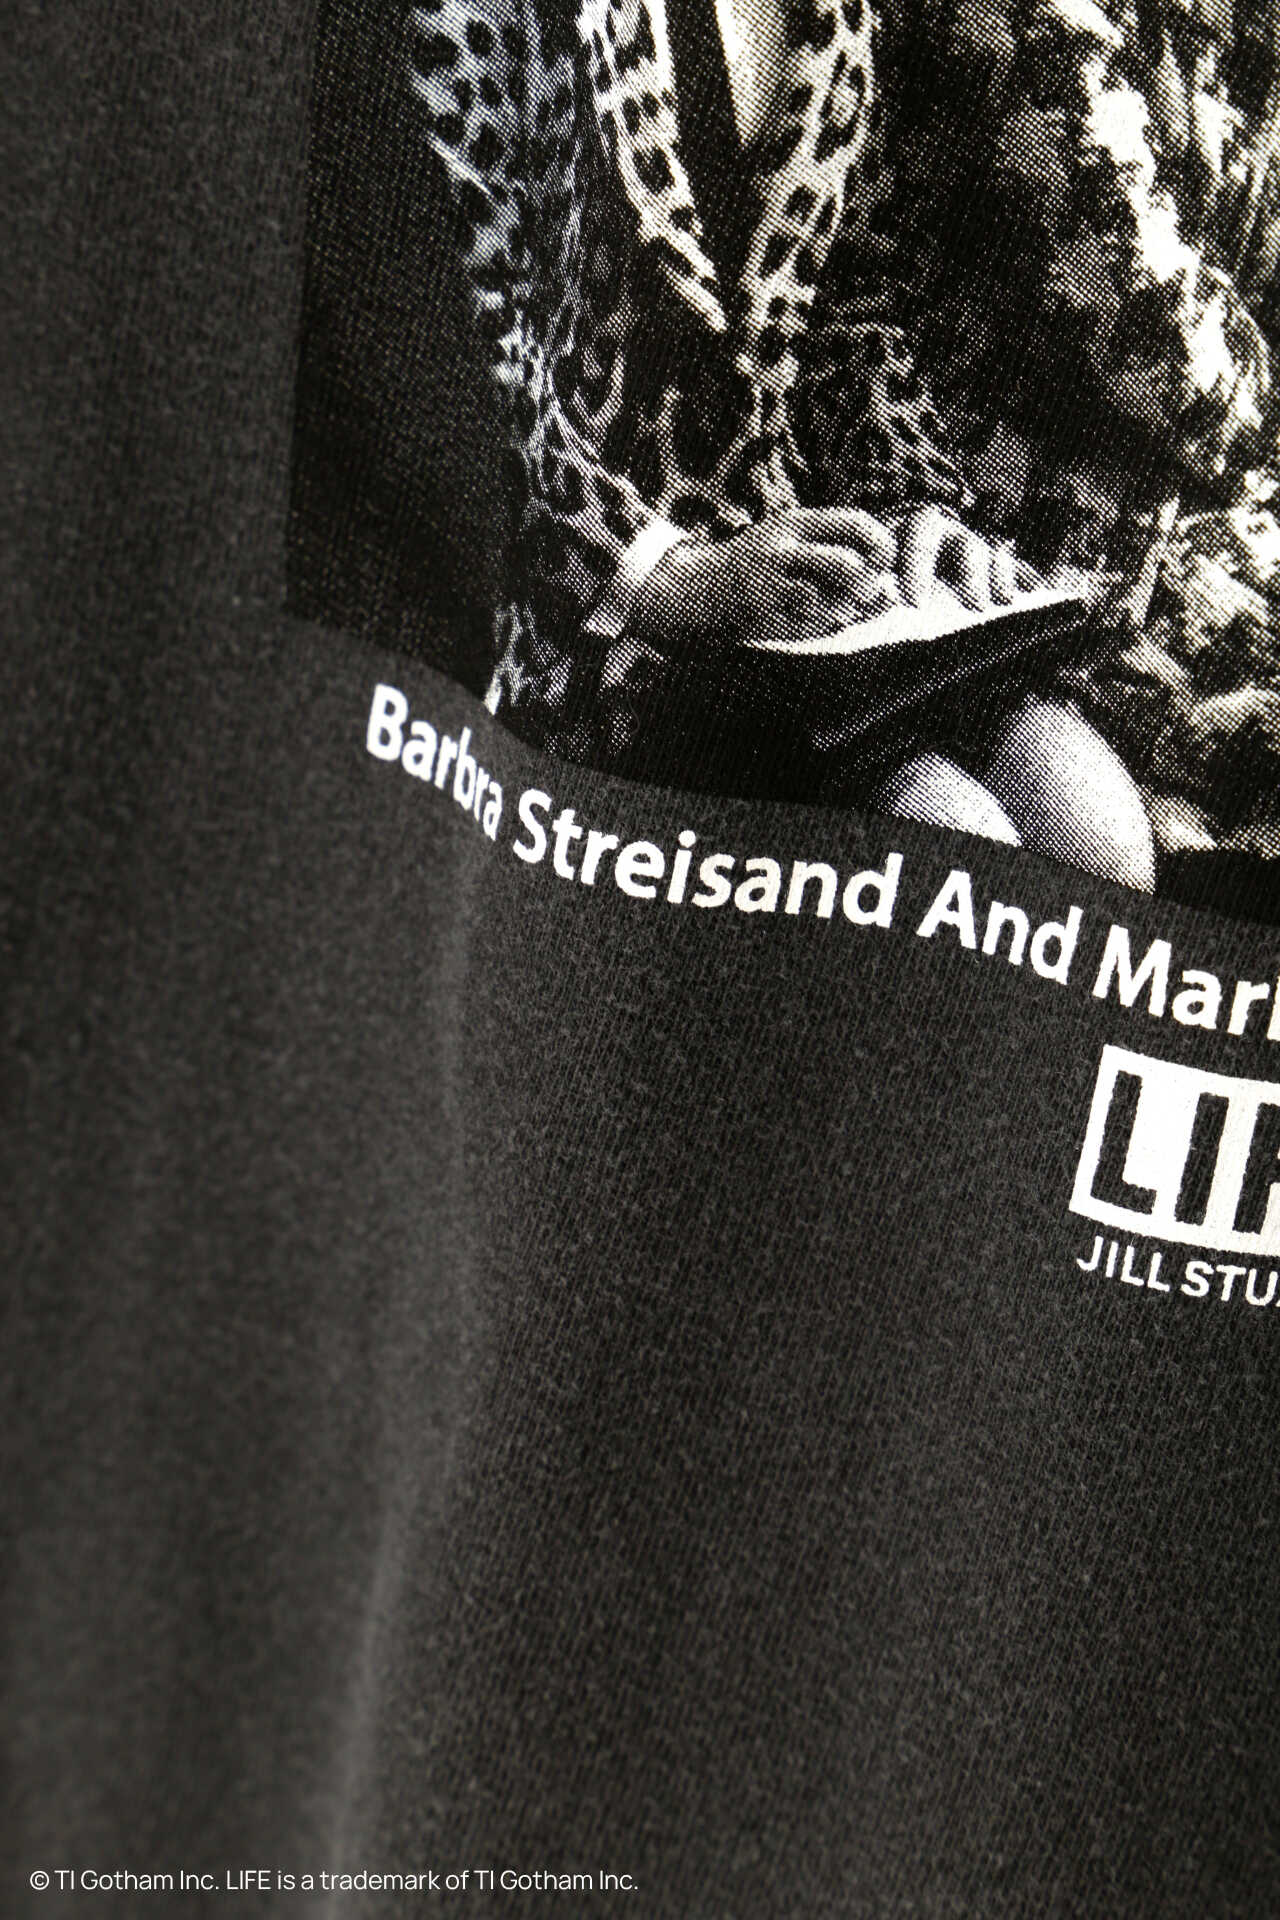 LIFE magazine Tシャツ #01